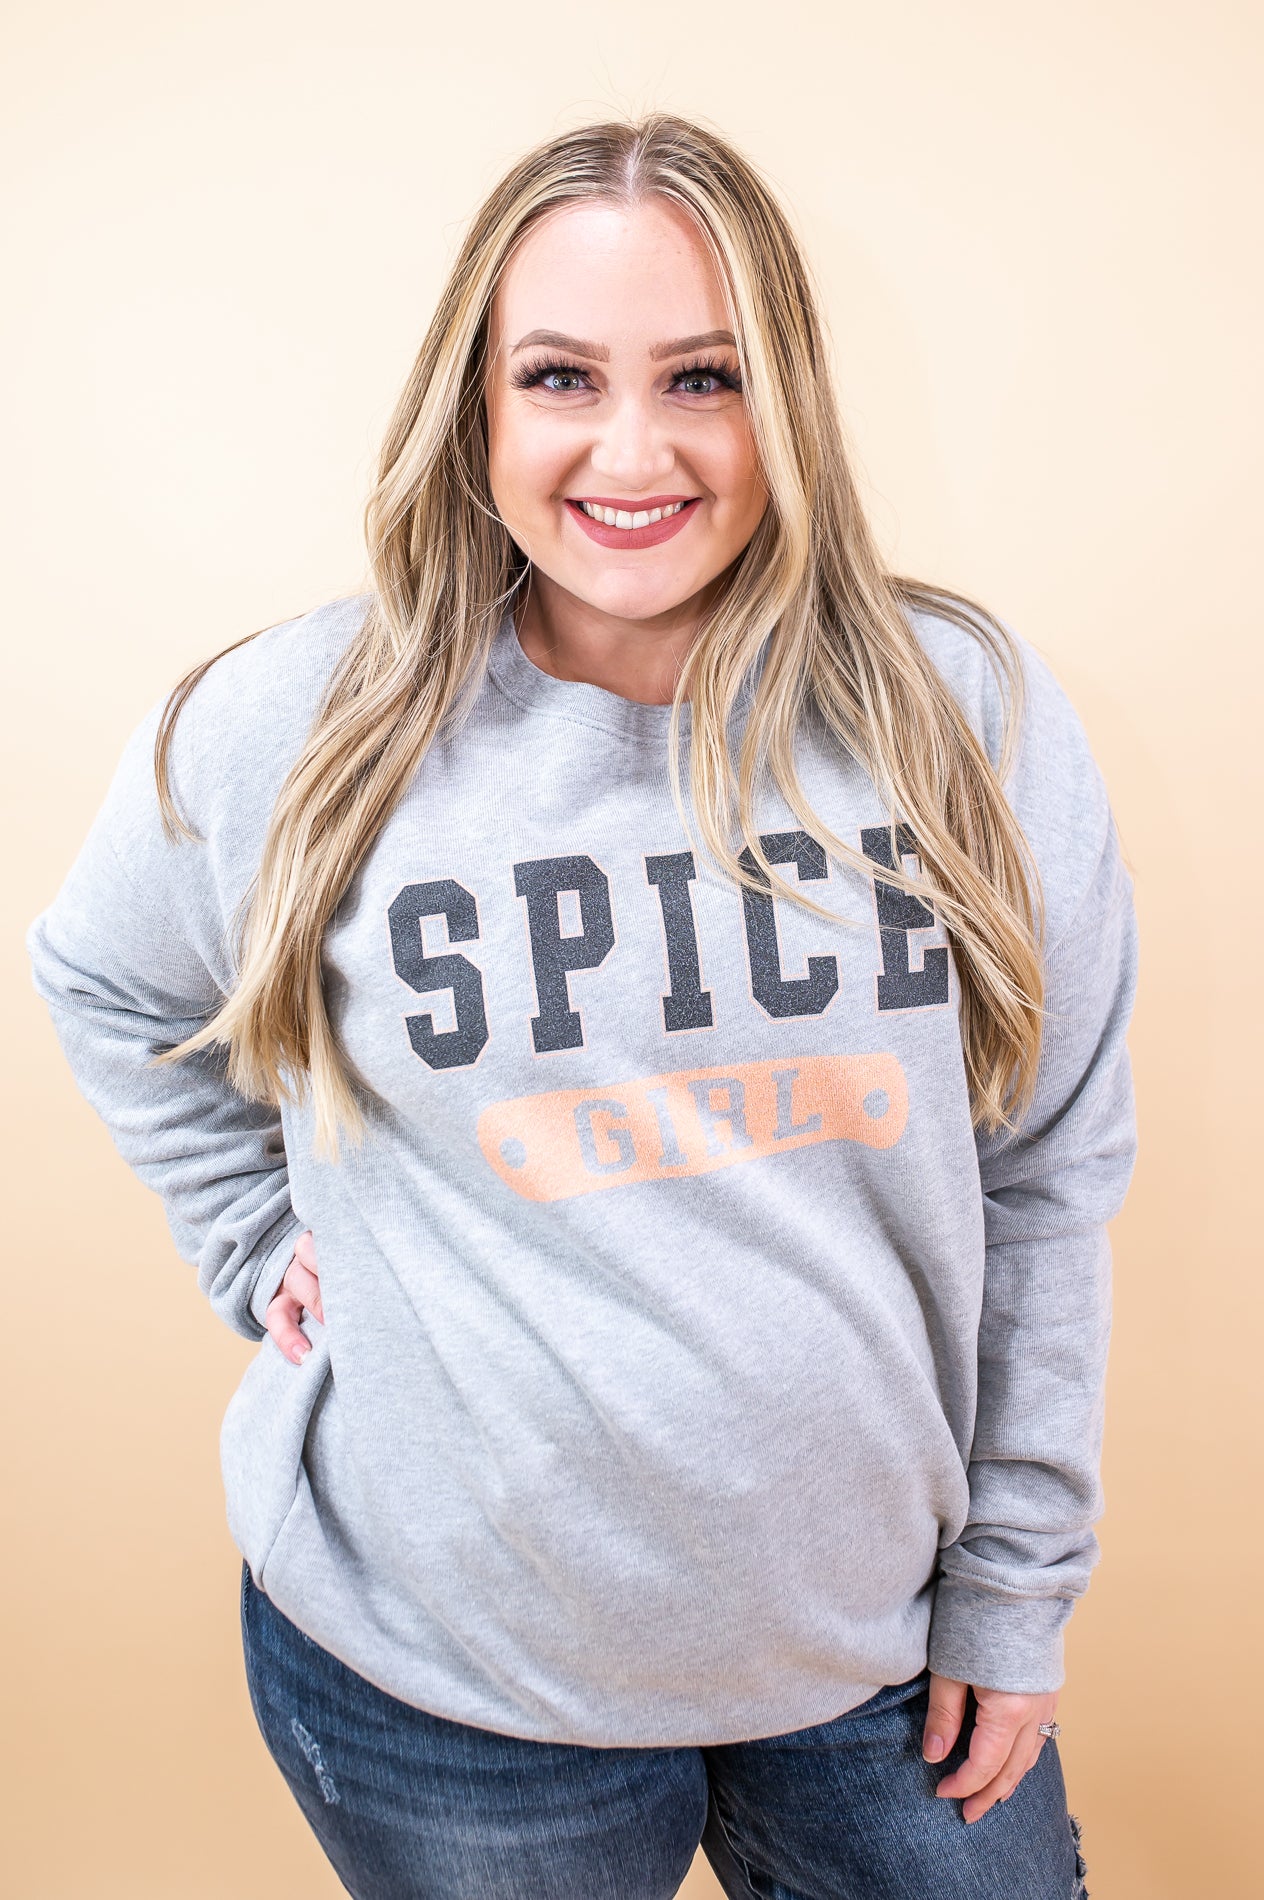 Spice Girl Athletic Heather Gray Graphic Sweatshirt - A2254AHG